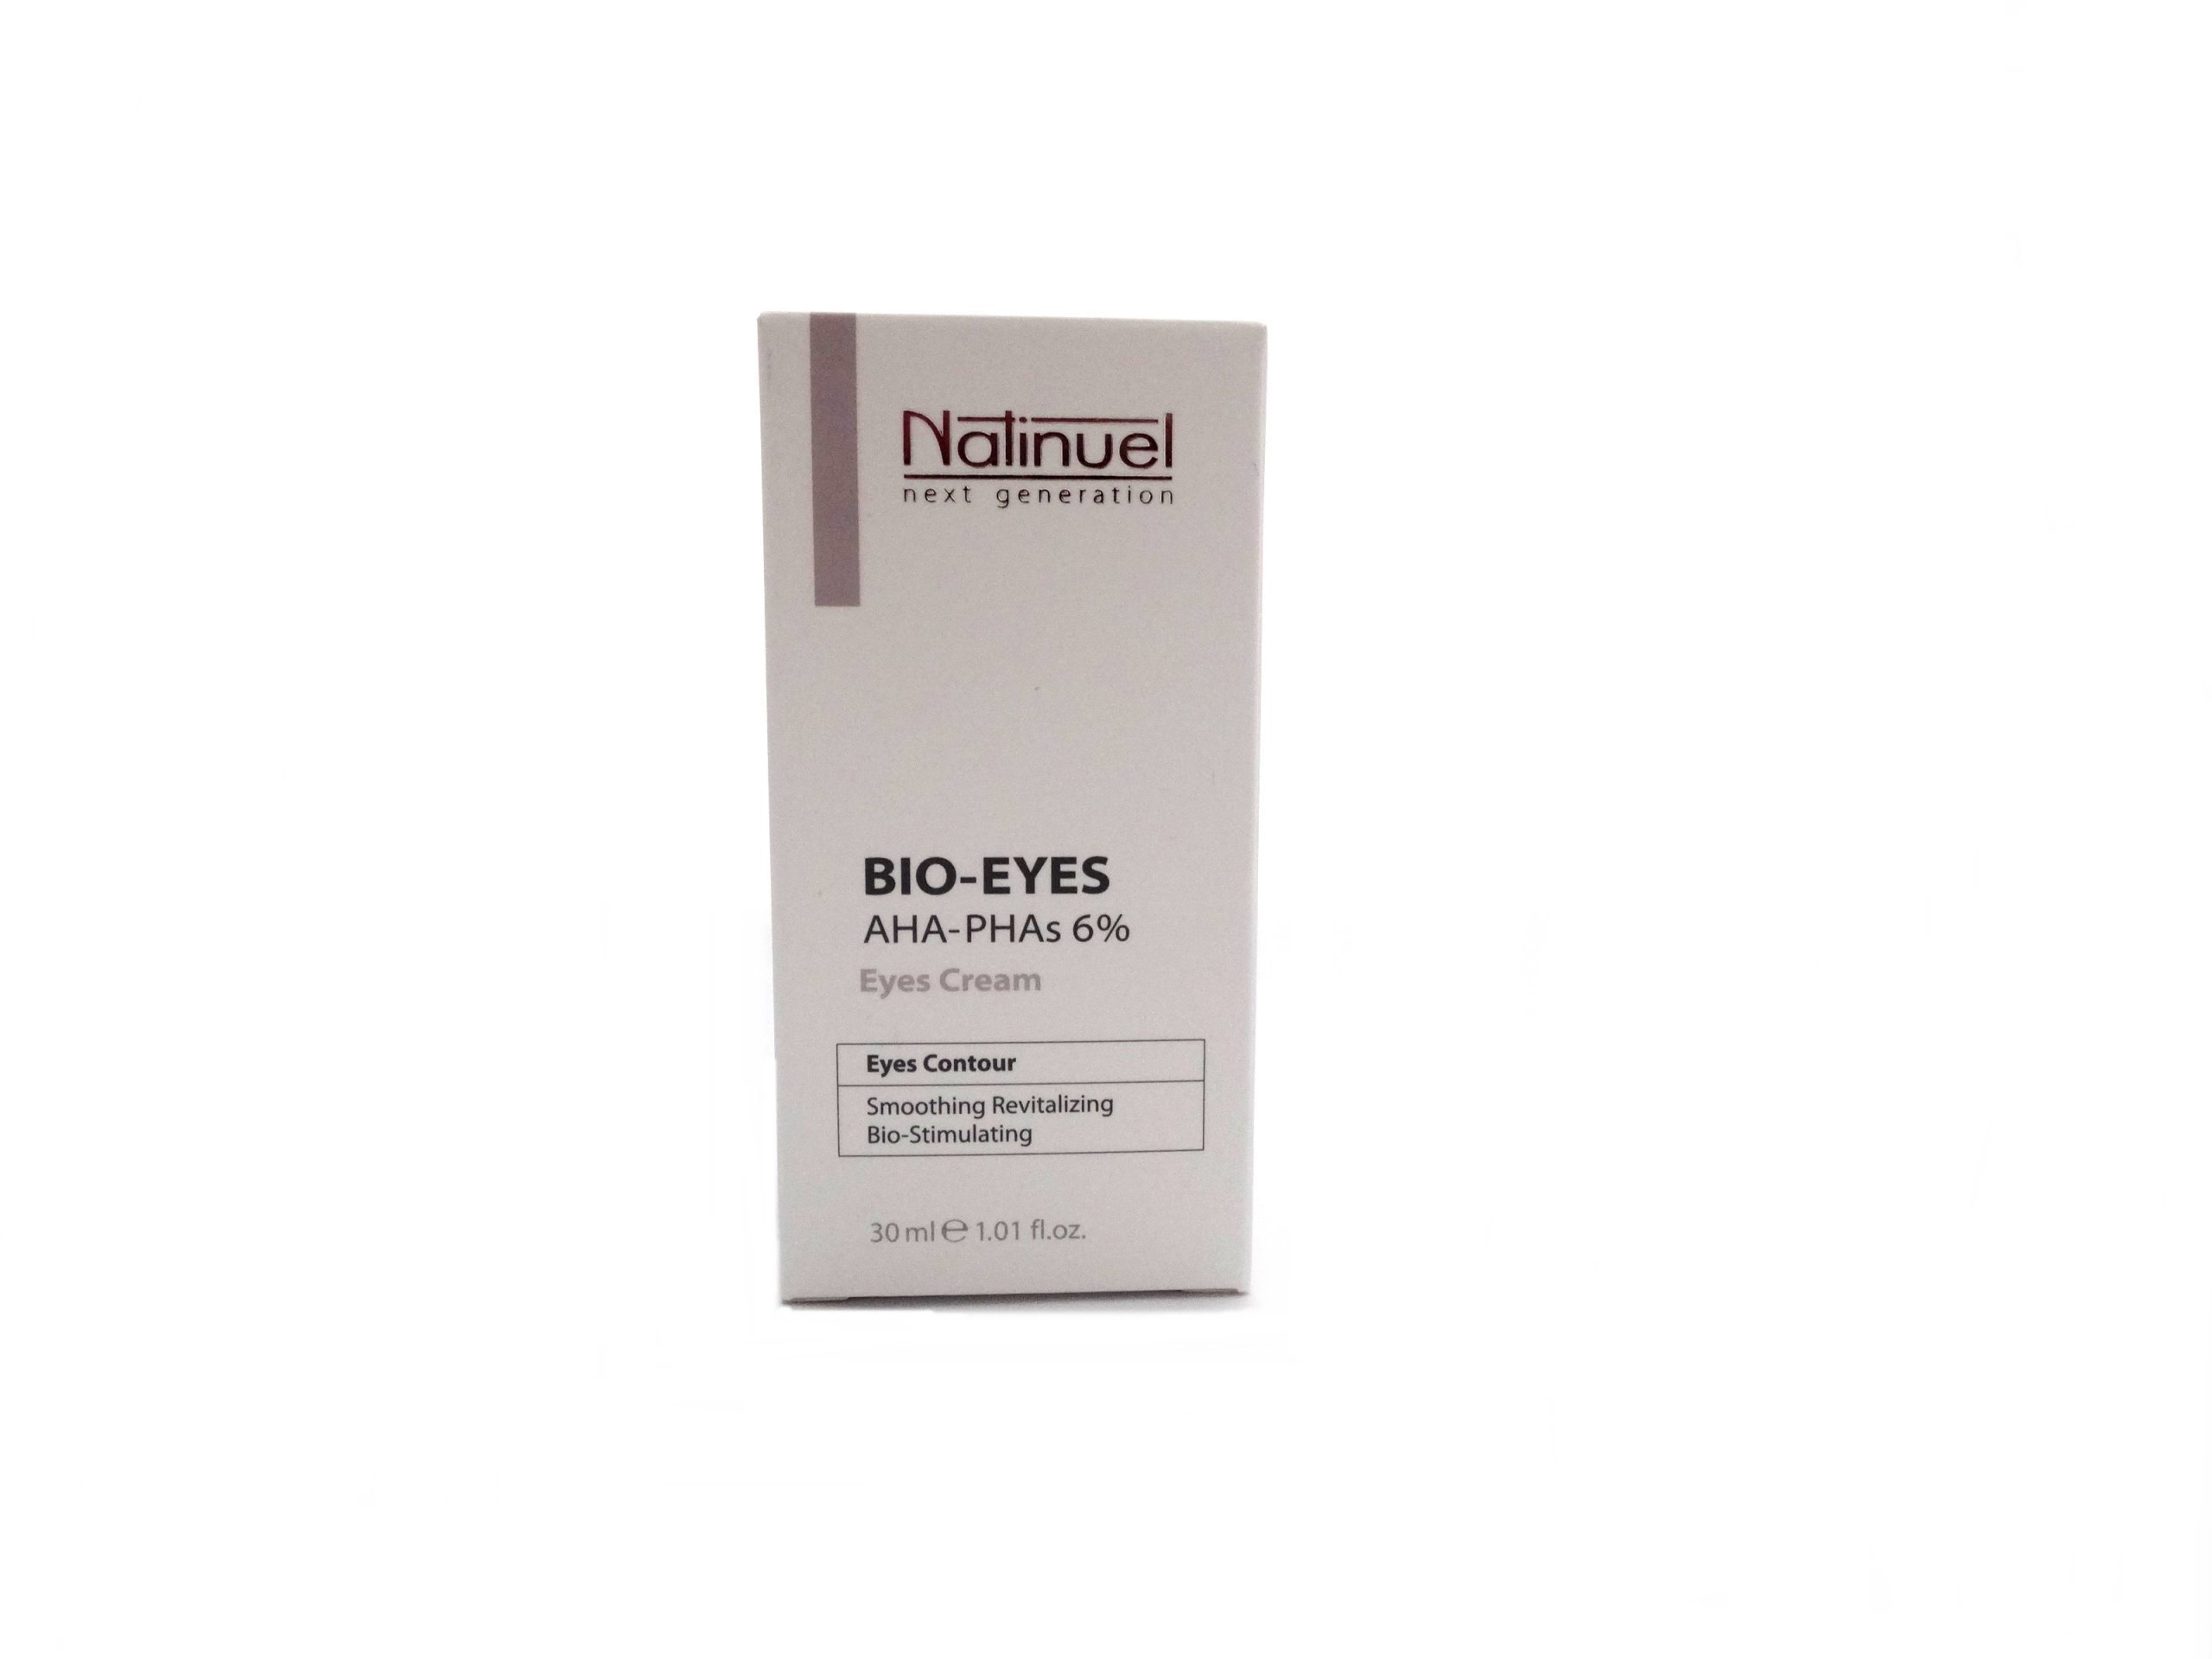 Natinuel косметика. Natinuel / Bio-Eyes Aha-pha 6% / крем для кожи вокруг глаз. Natinuel косметика seba12. Natinuel Cleanser Phas-Aha 5. Натинуэль the look.